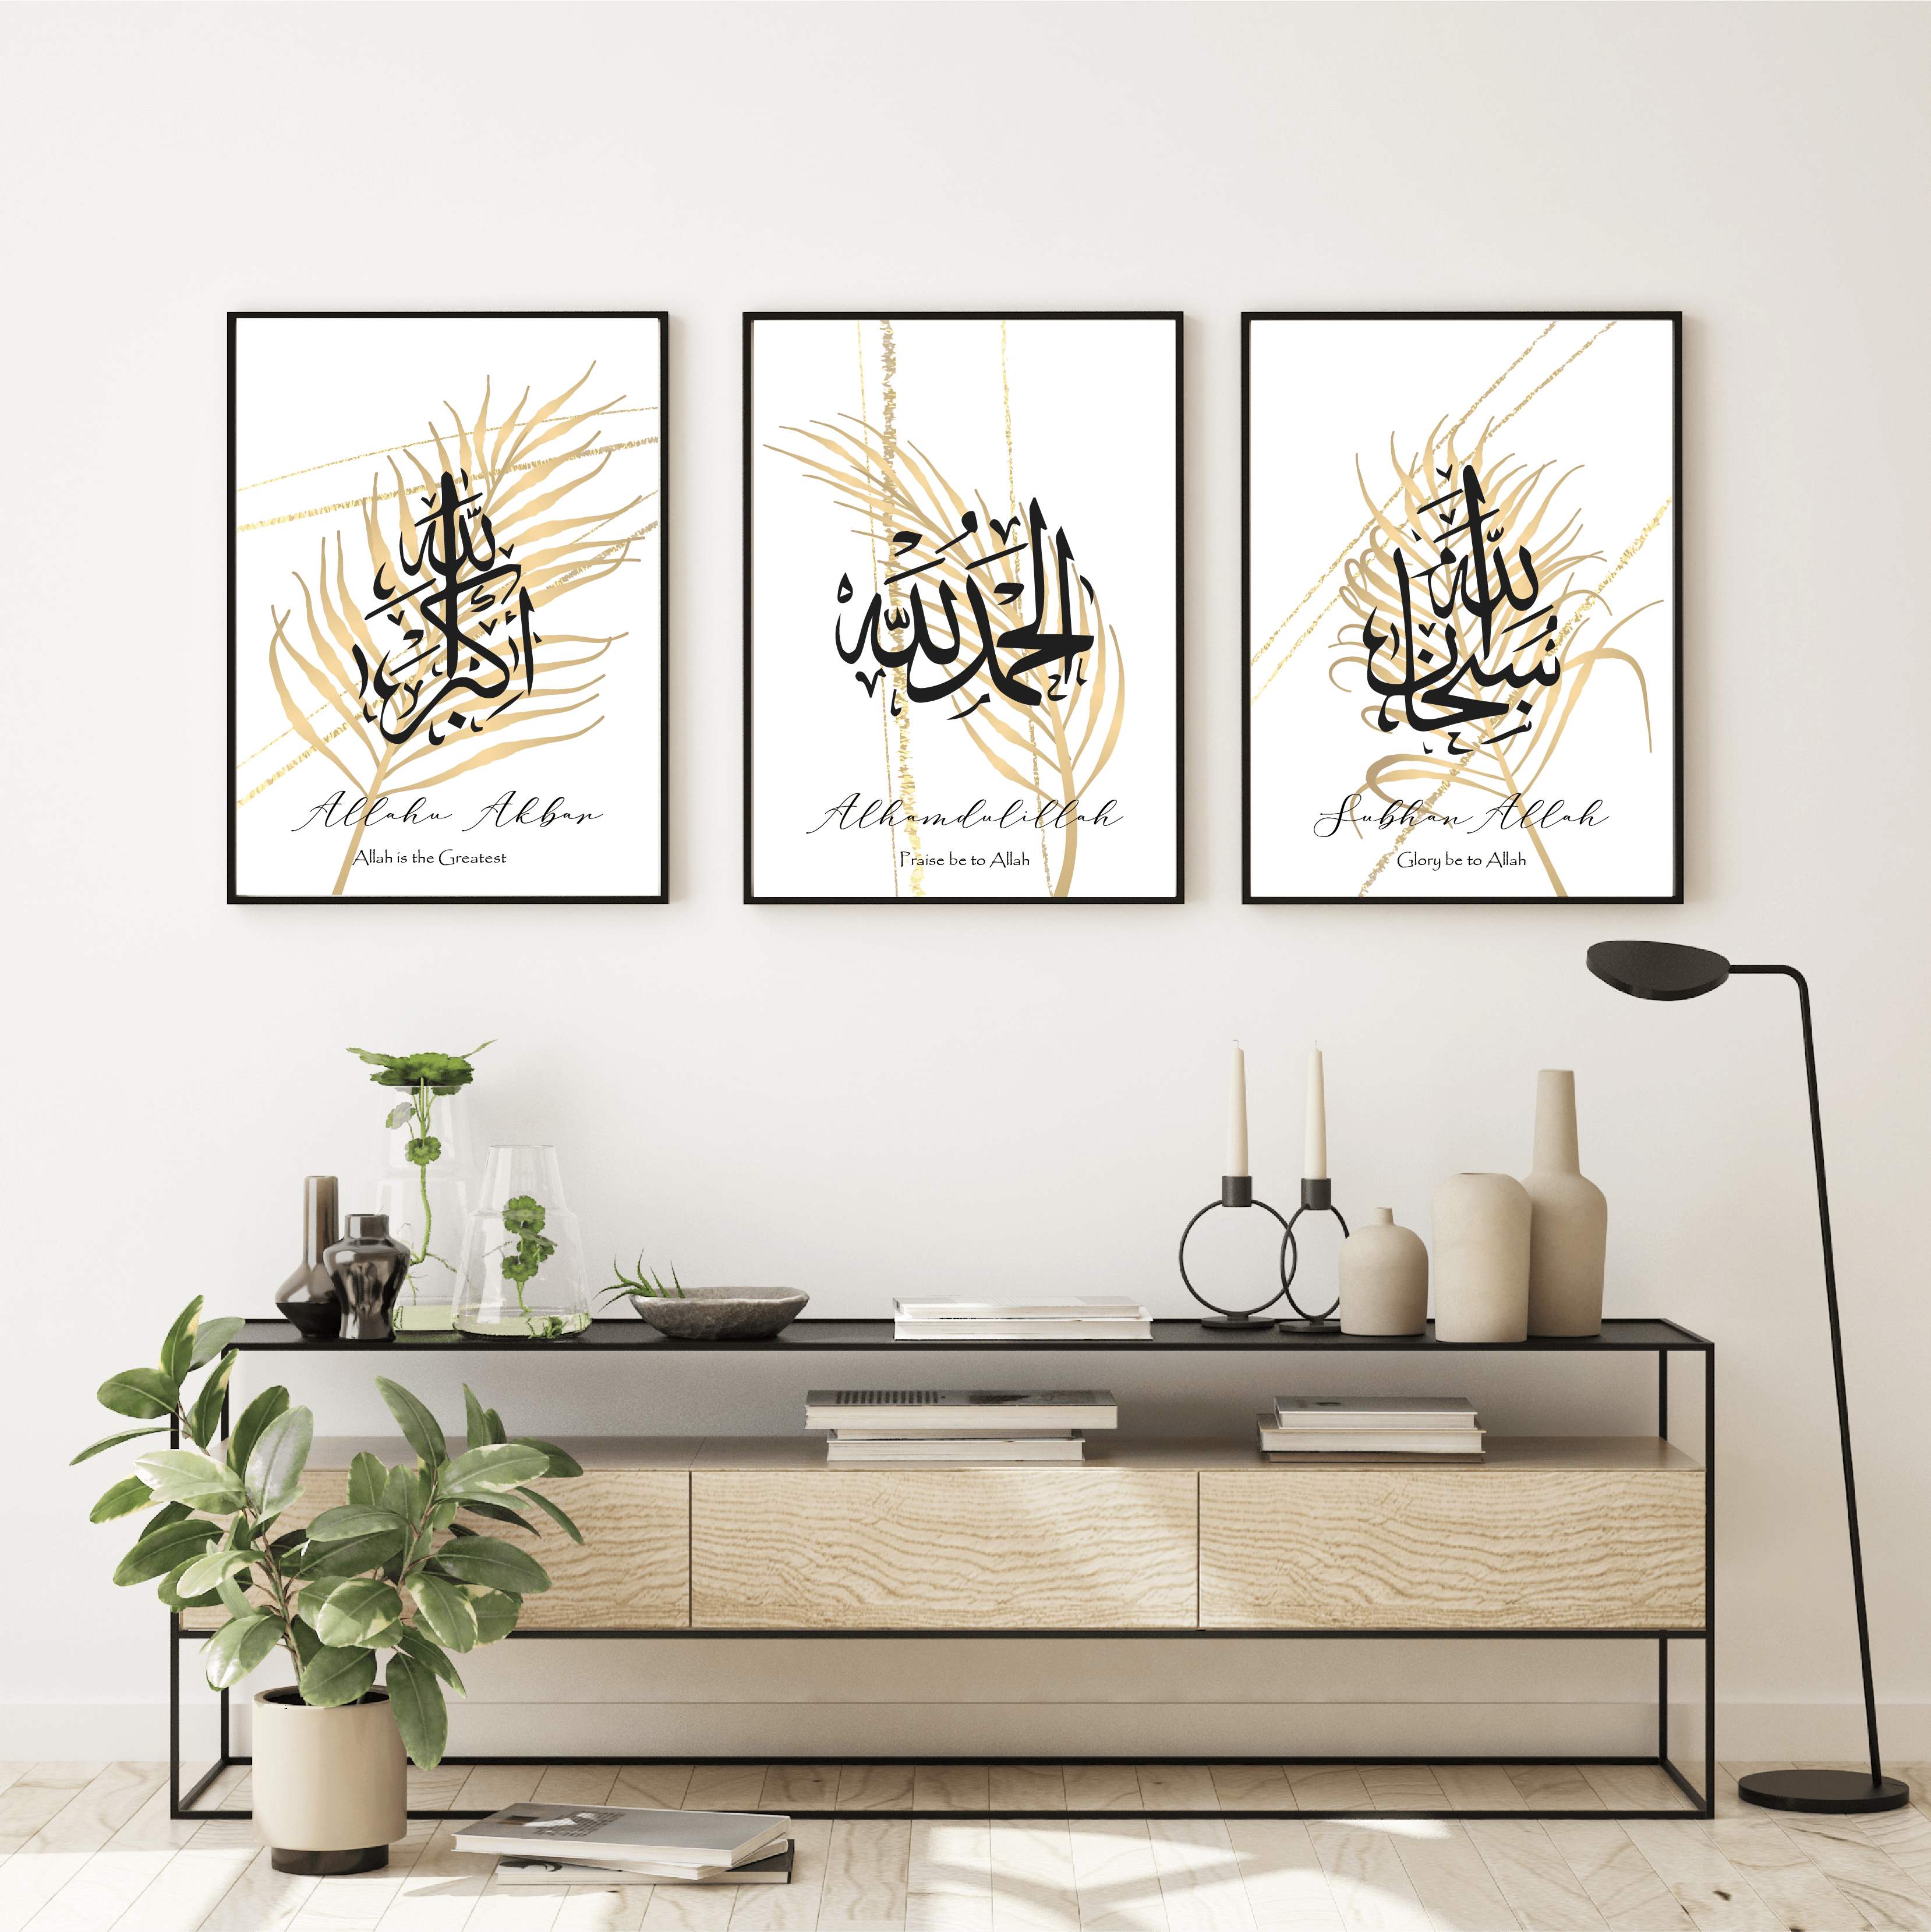 Set of 3 Golden Leaf Tasbeeh Print SubhanAllah Alhamdulillah AllahuAkbar Islamic Wall Art Prints - Peaceful Arts